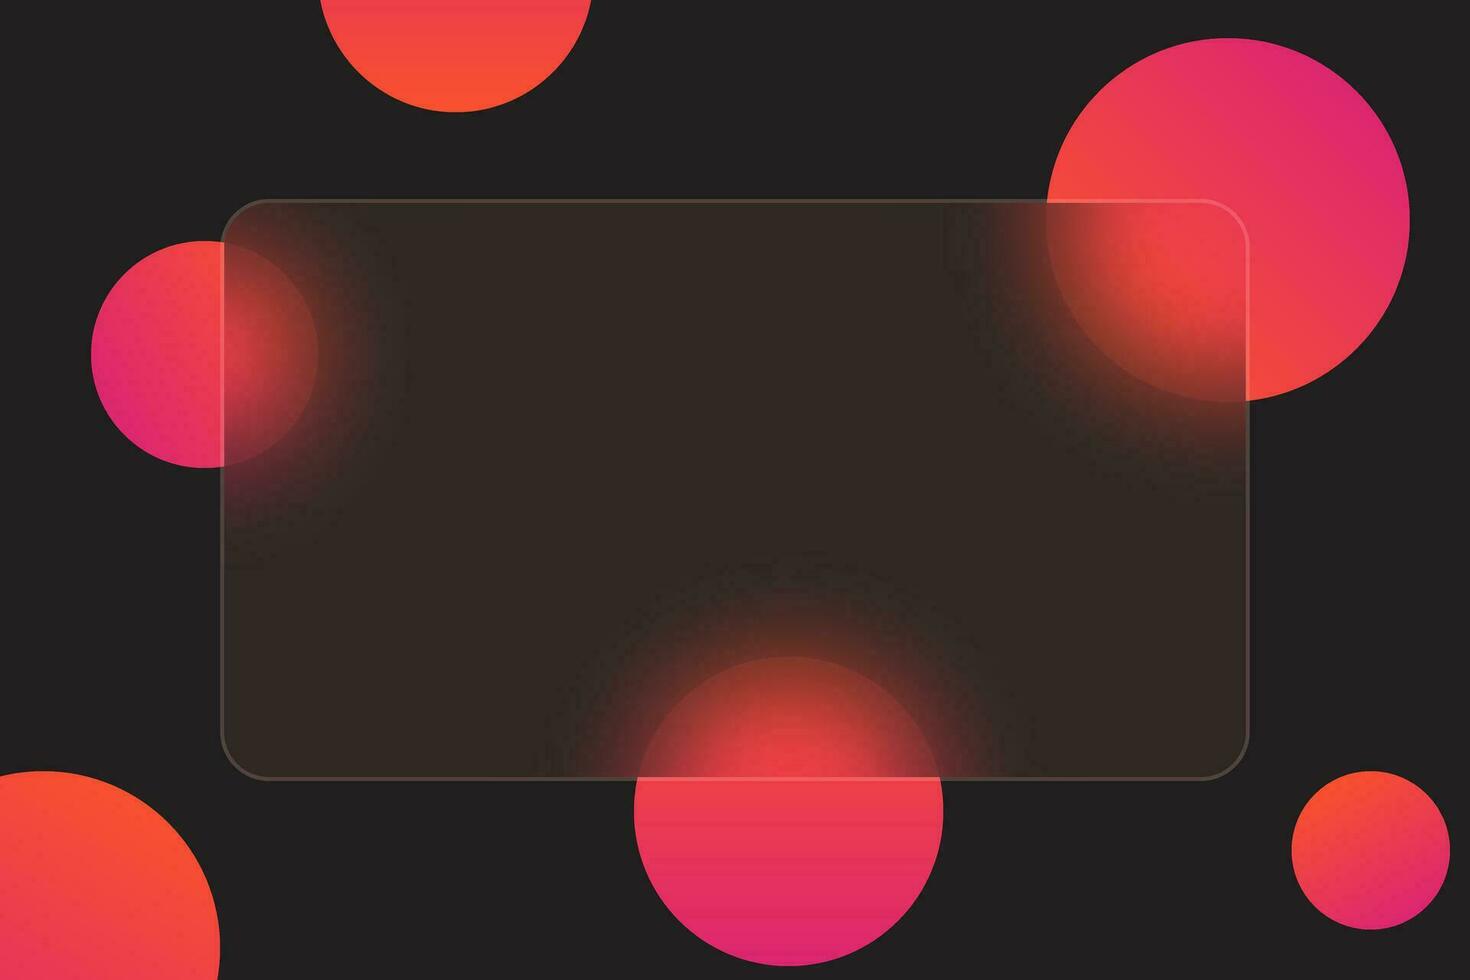 digital resumen antecedentes de brillante neón círculos con vaso morfismo rectangular plato en el centro. horizontal moderno bandera modelo con translúcido marco para texto. vector ilustración